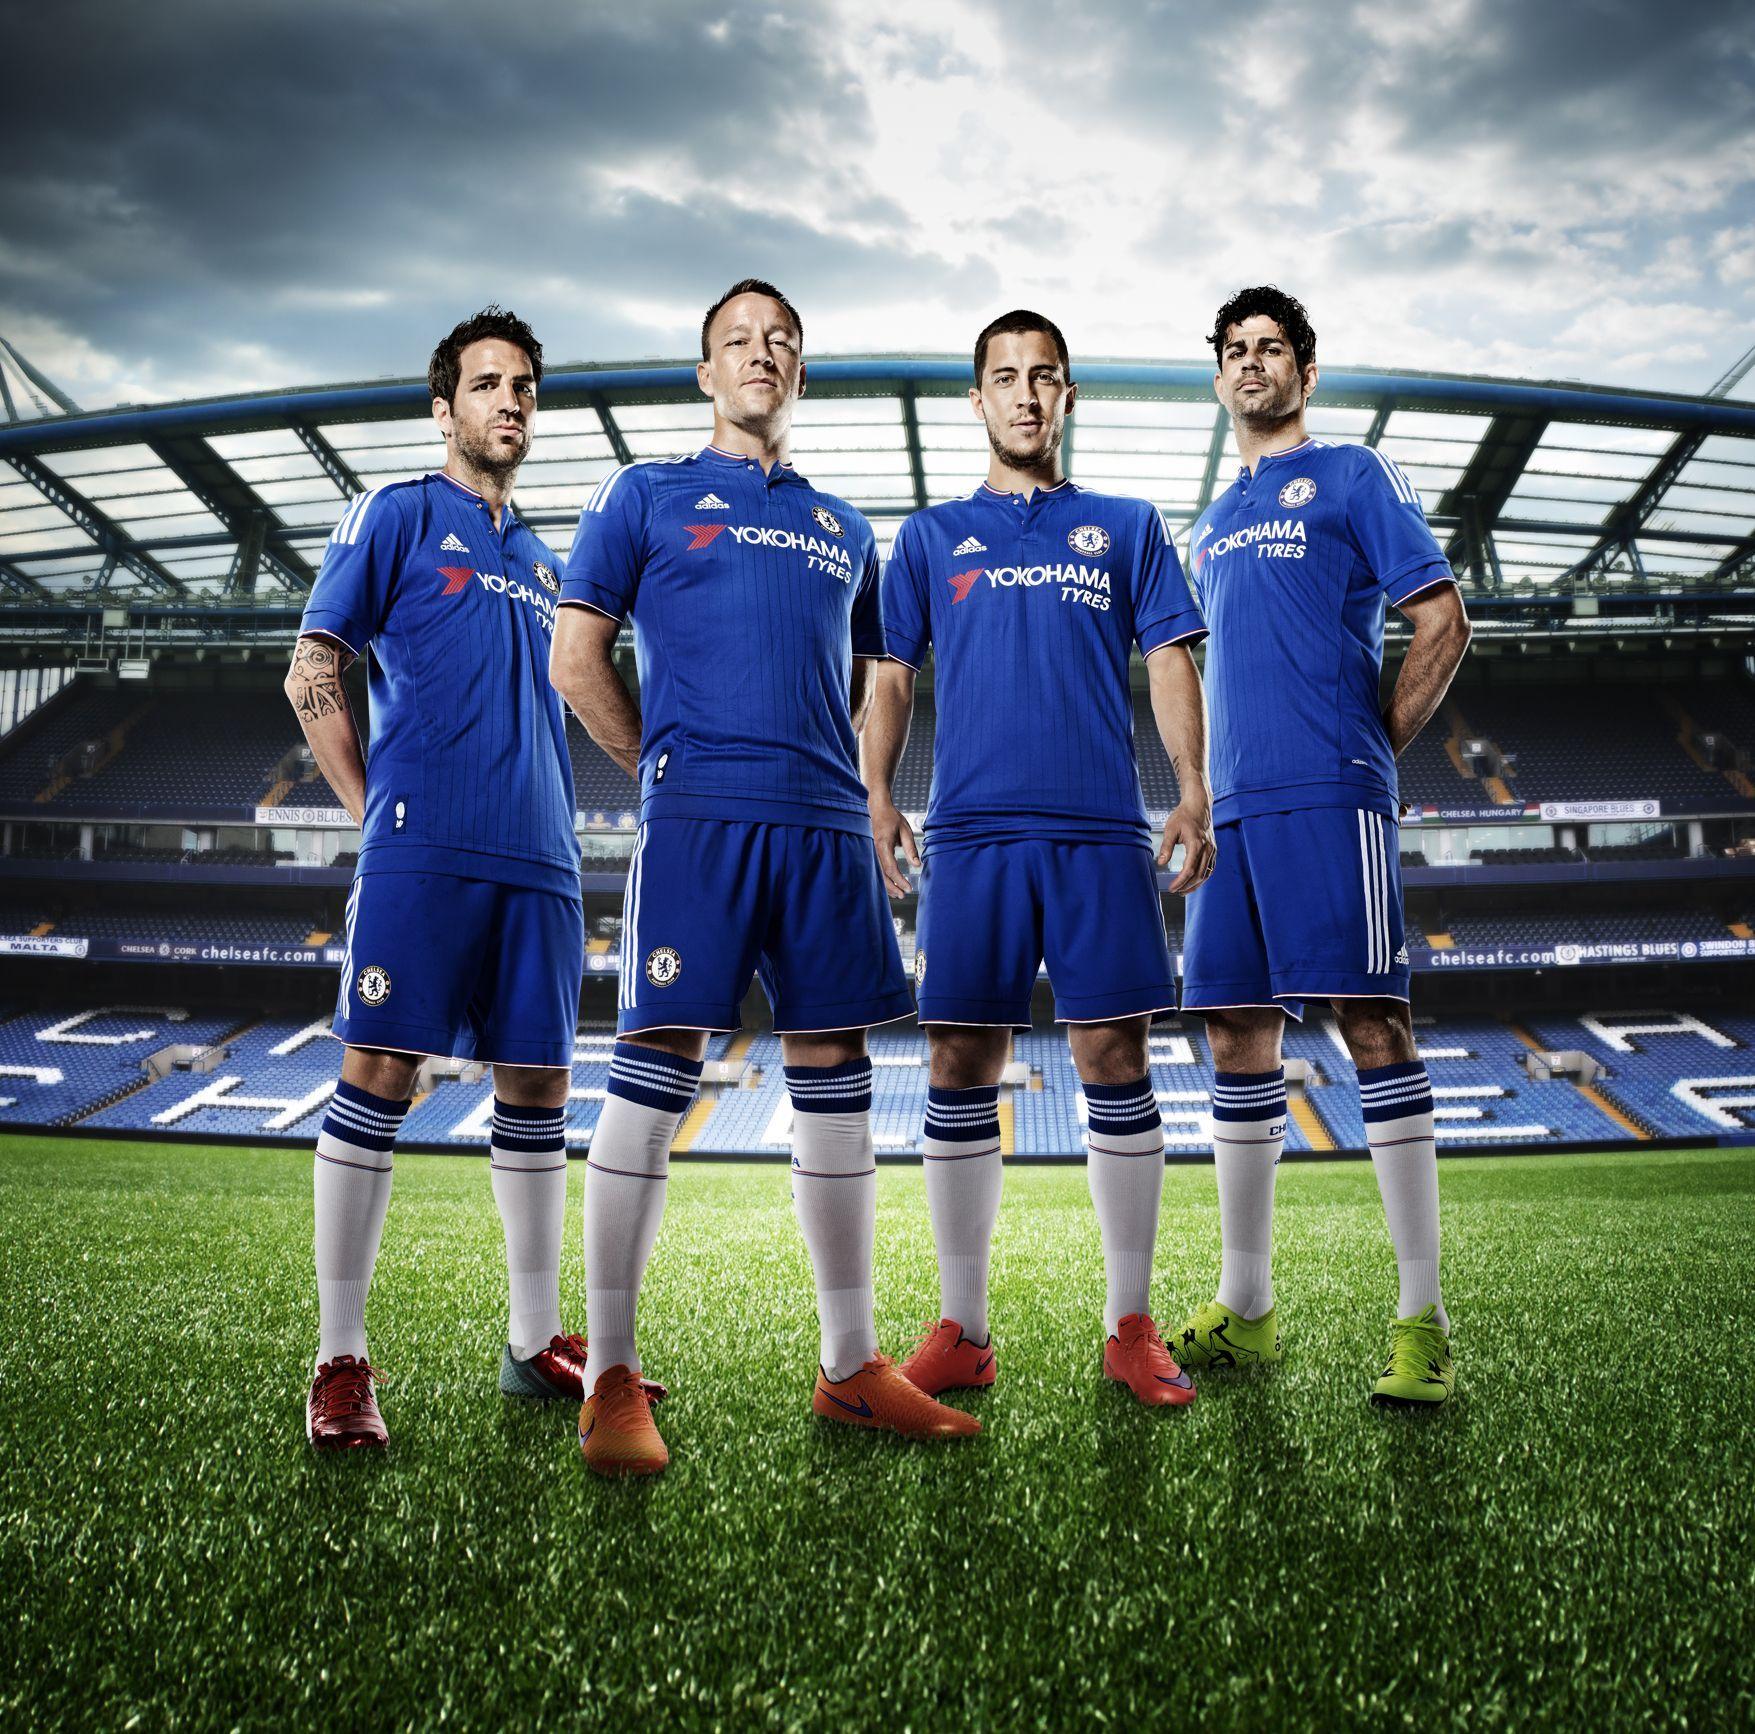 Chelsea Football Club Unveils New Uniform with “YOKOHAMA TYRES